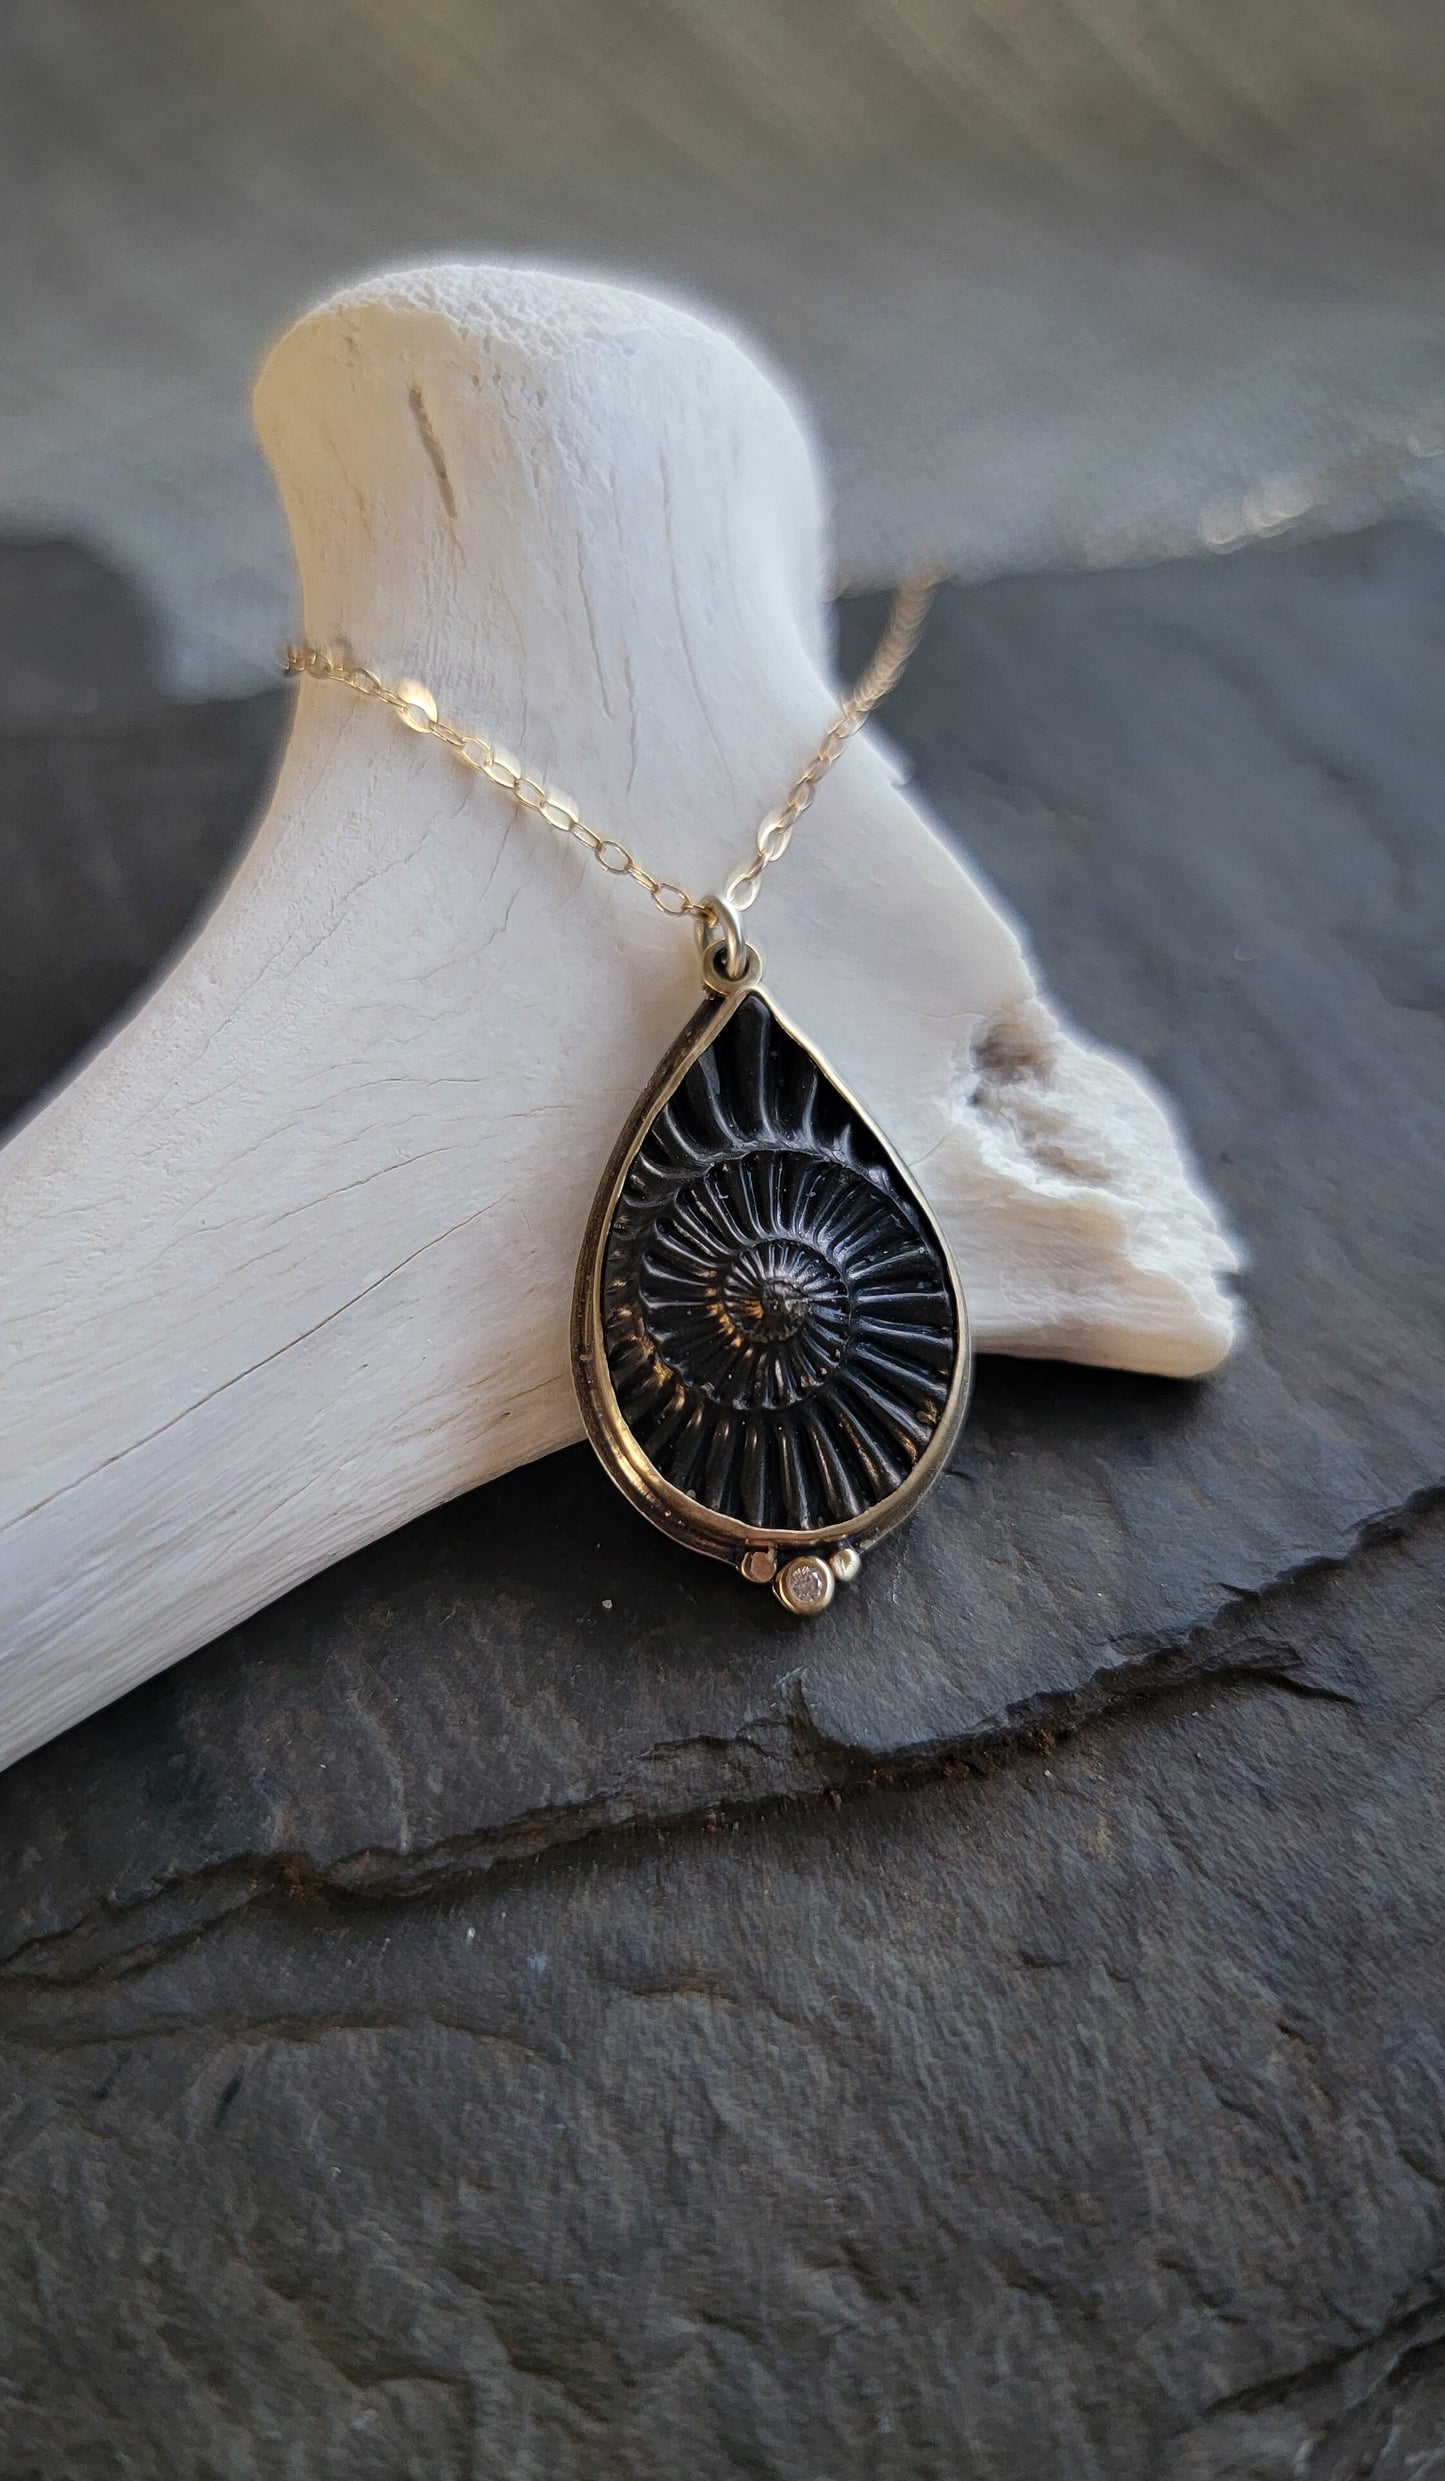 Pyritized Ammonite and Diamond Necklace